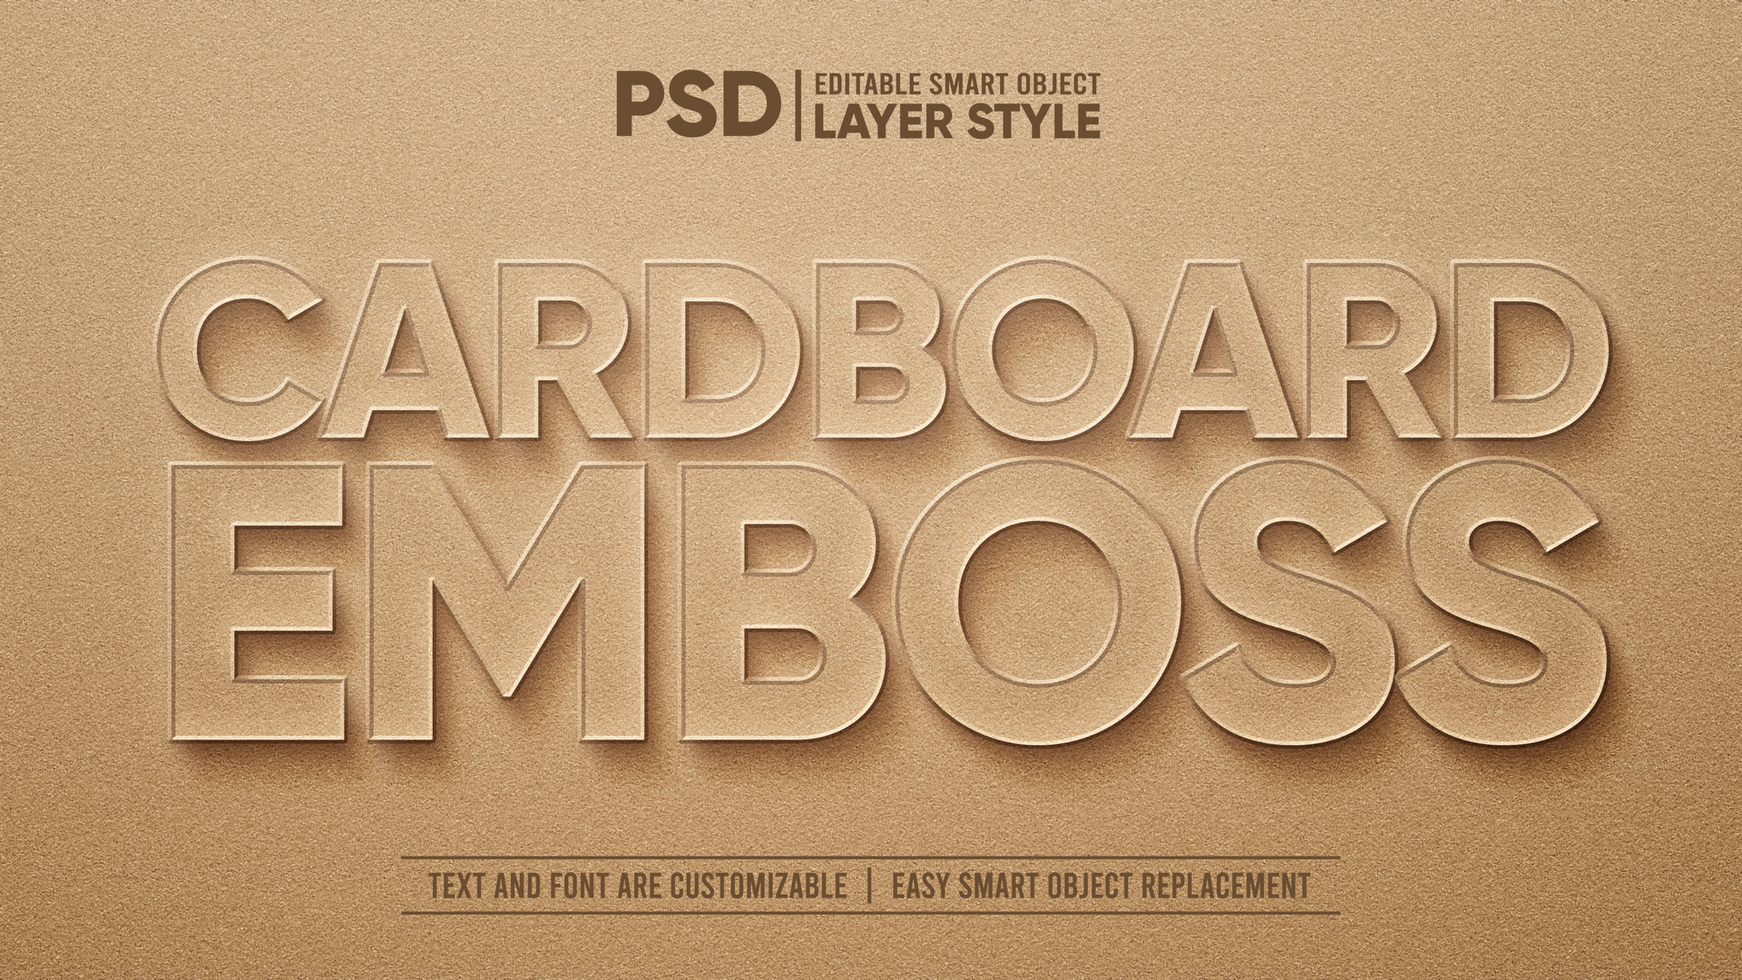 marrón cartulina papel 3d realzar realista editable capa estilo inteligente objeto texto efecto psd